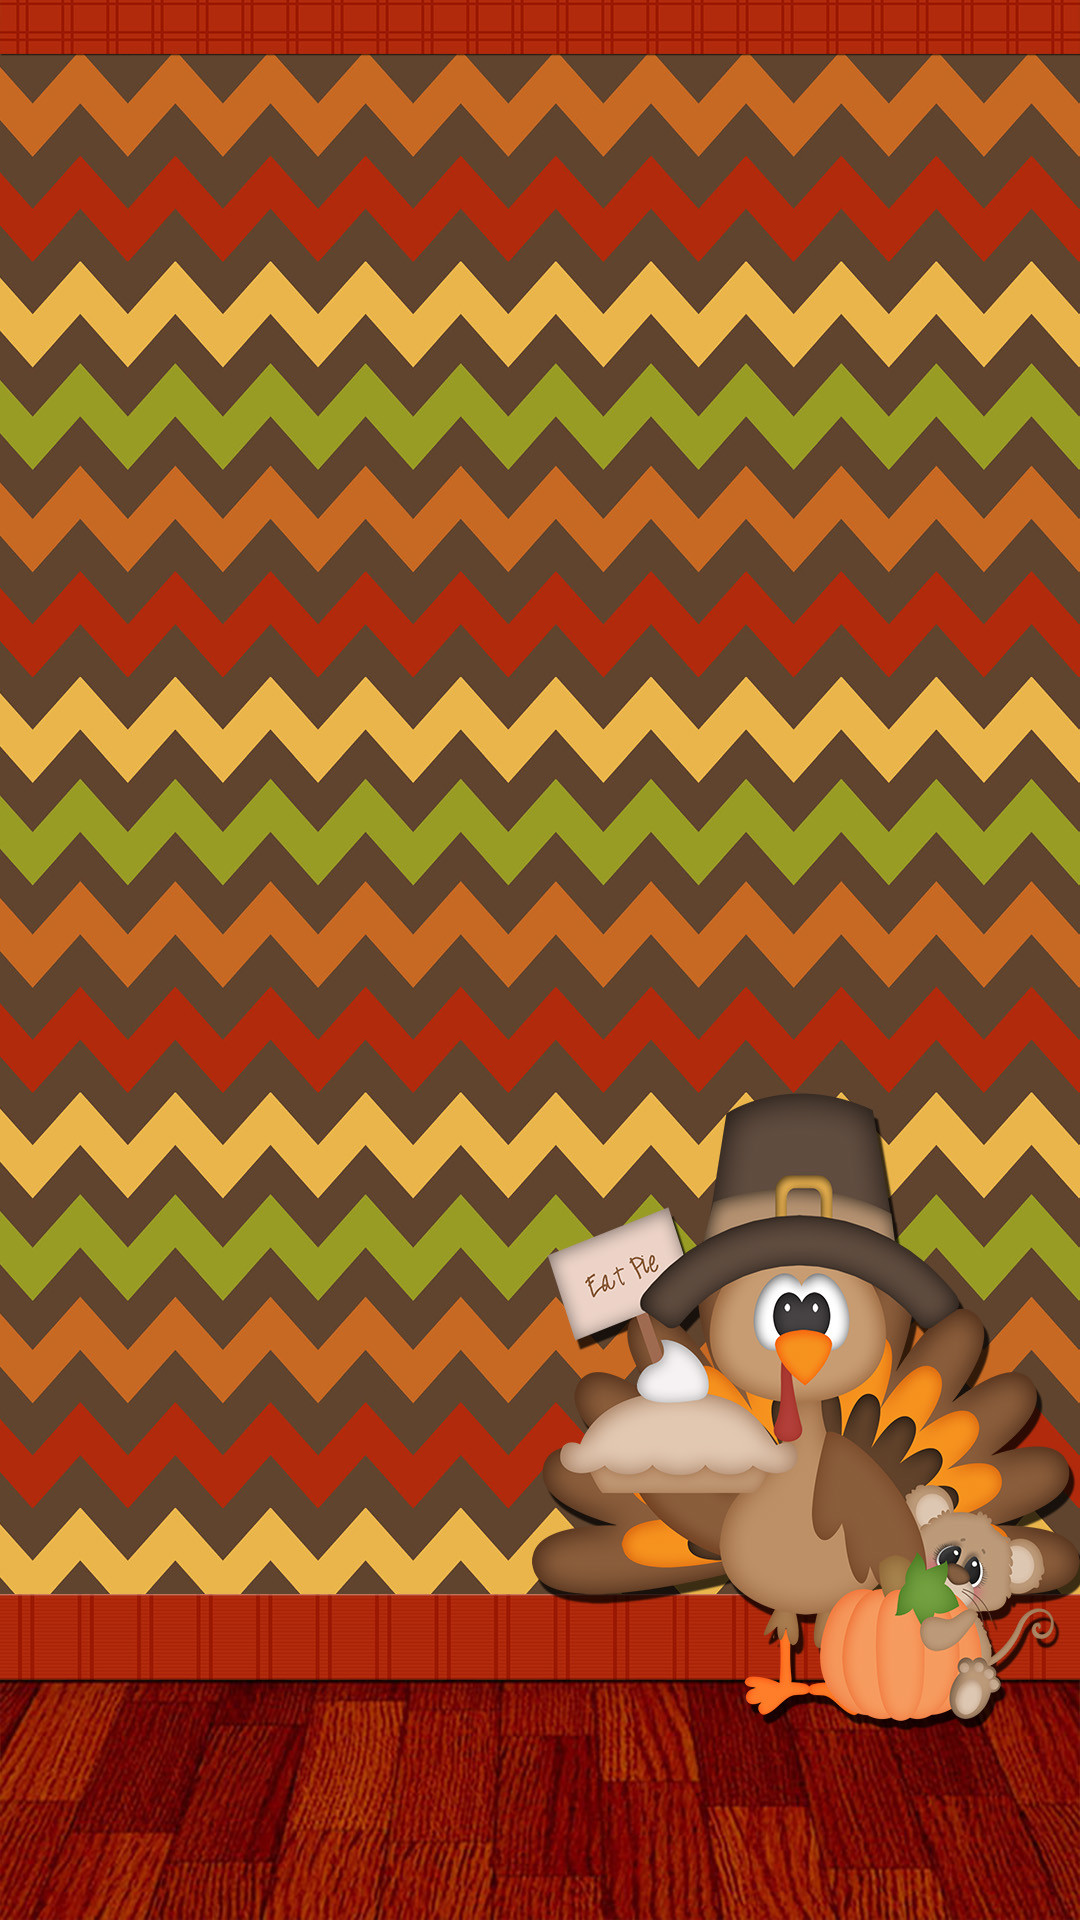 1080x1920 iPhone Wallpaper - Thanksgiving tjn